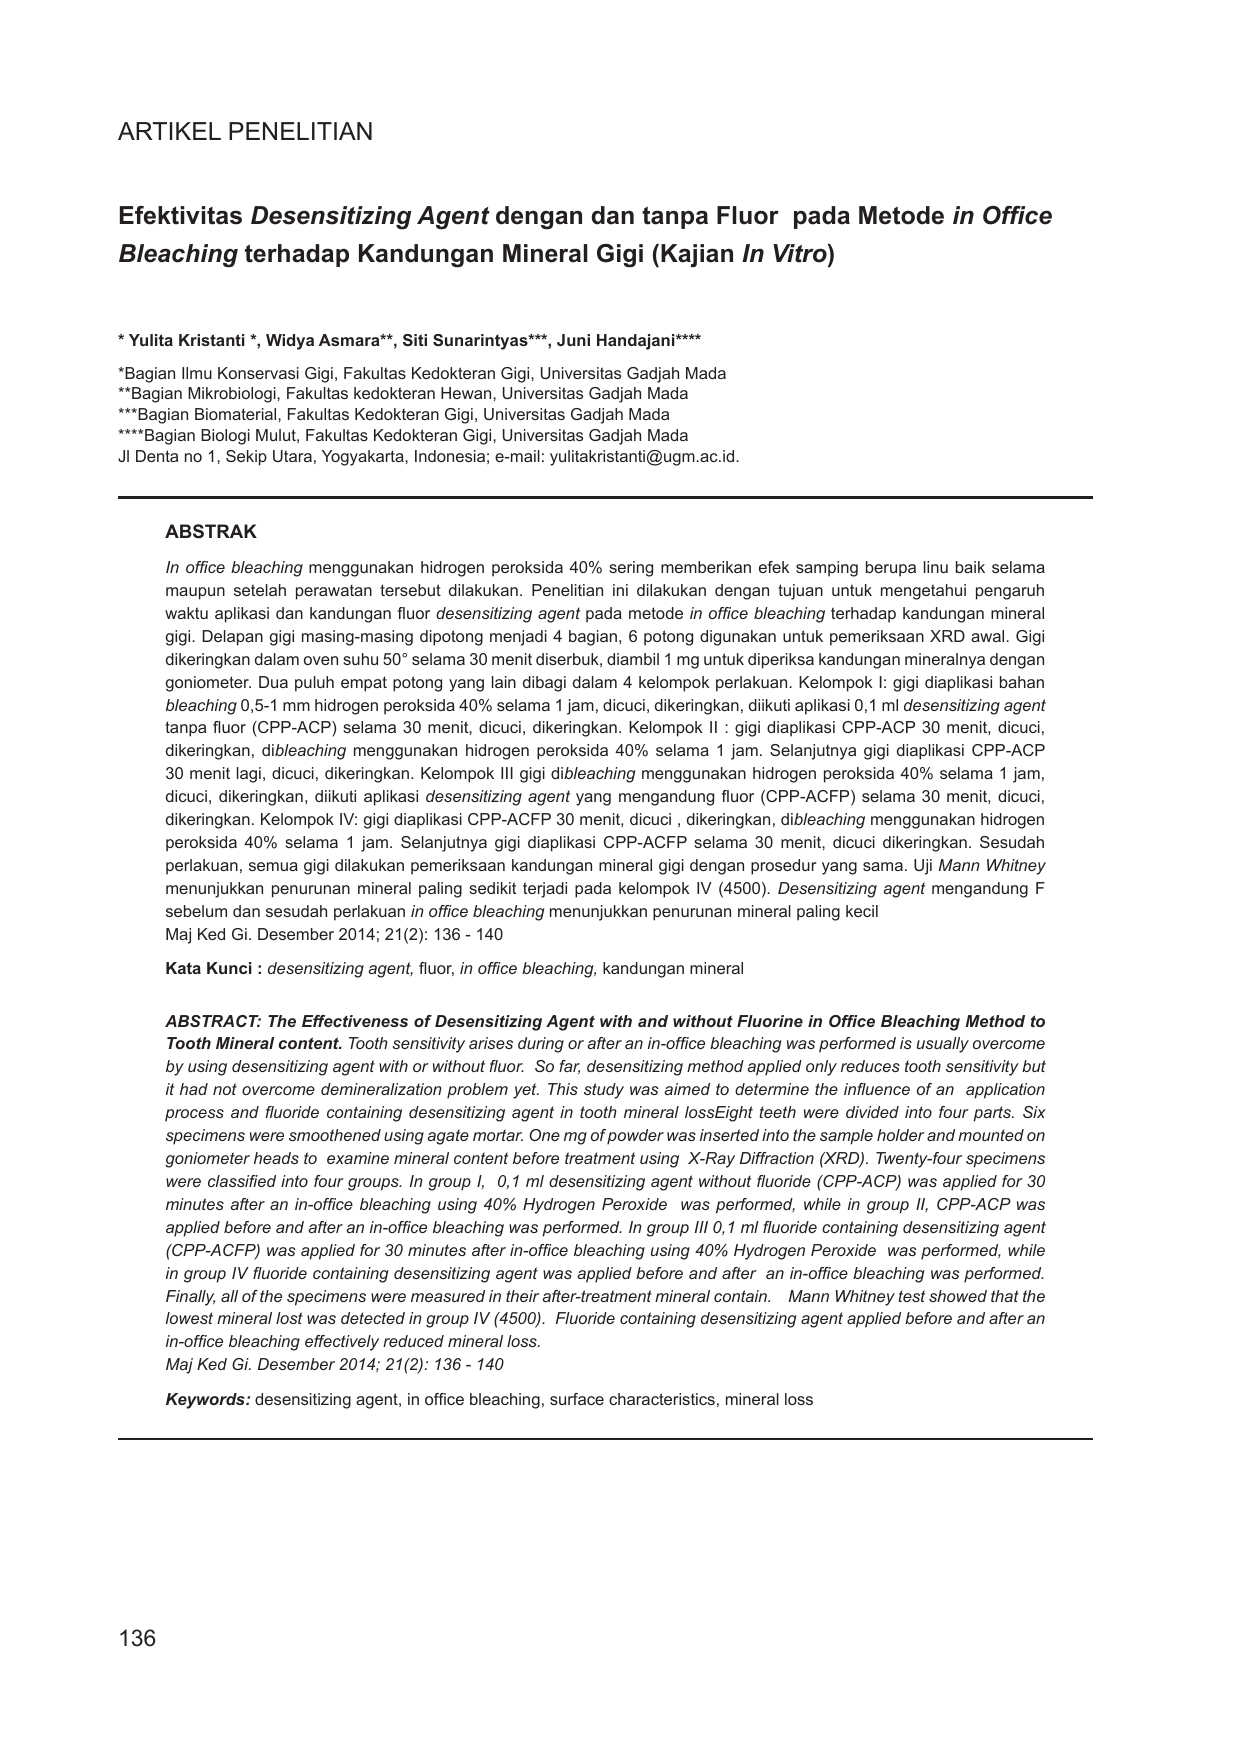 ARTIKEL PENELITIAN Efektivitas Desensitizing Agent dengan dan tanpa Fluor pada Metode in fice Bleaching terhadap Kandungan Mineral Gigi Kajian In Vitro